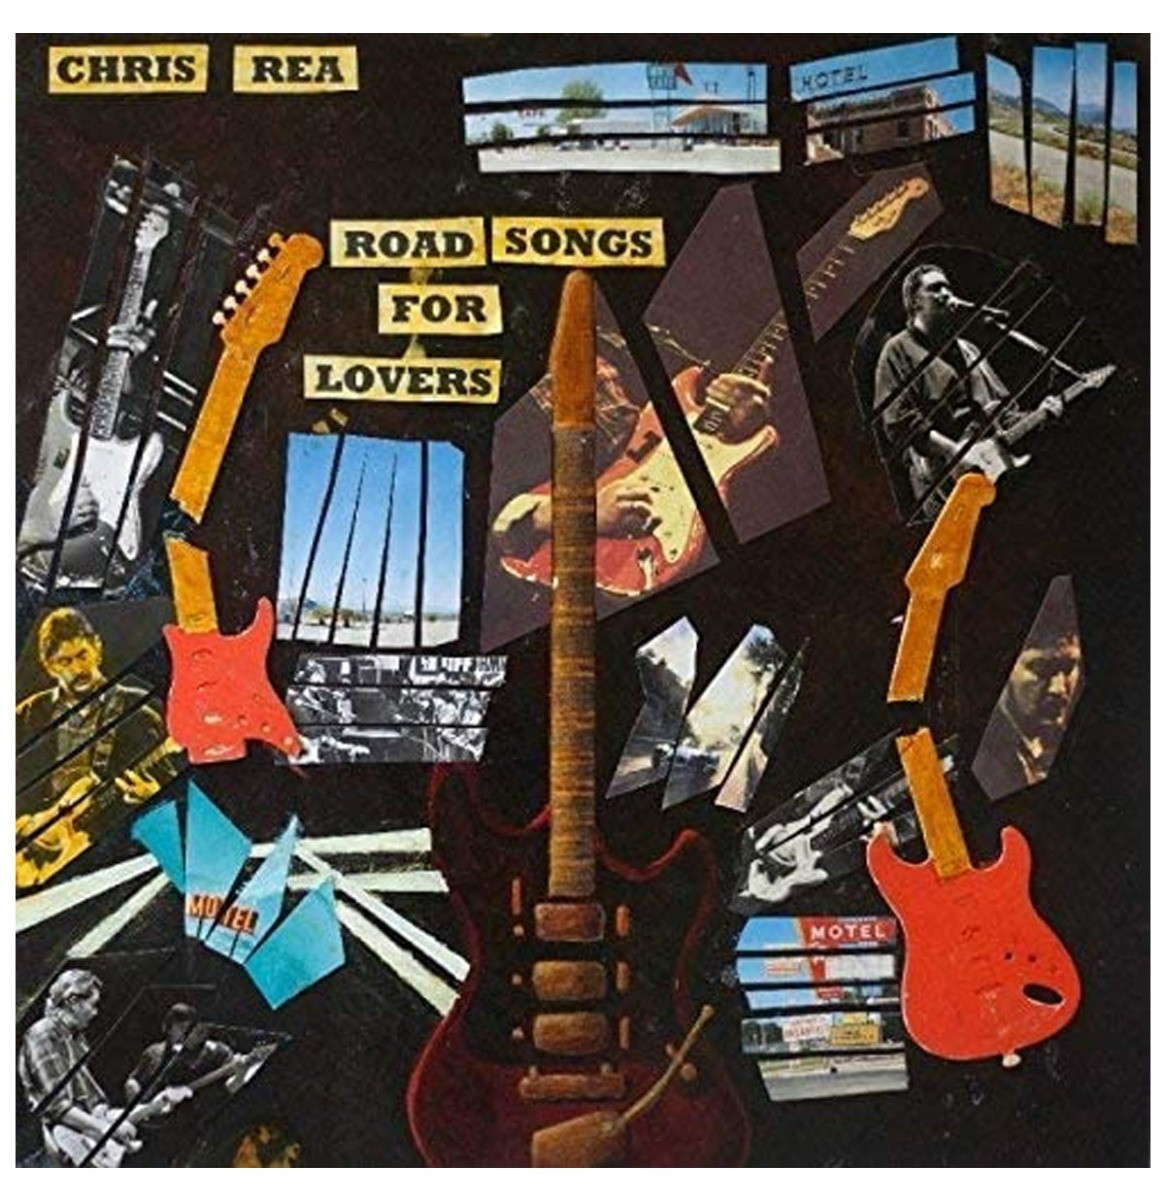 Chris Rea - Road Songs For Lovers 2-LP